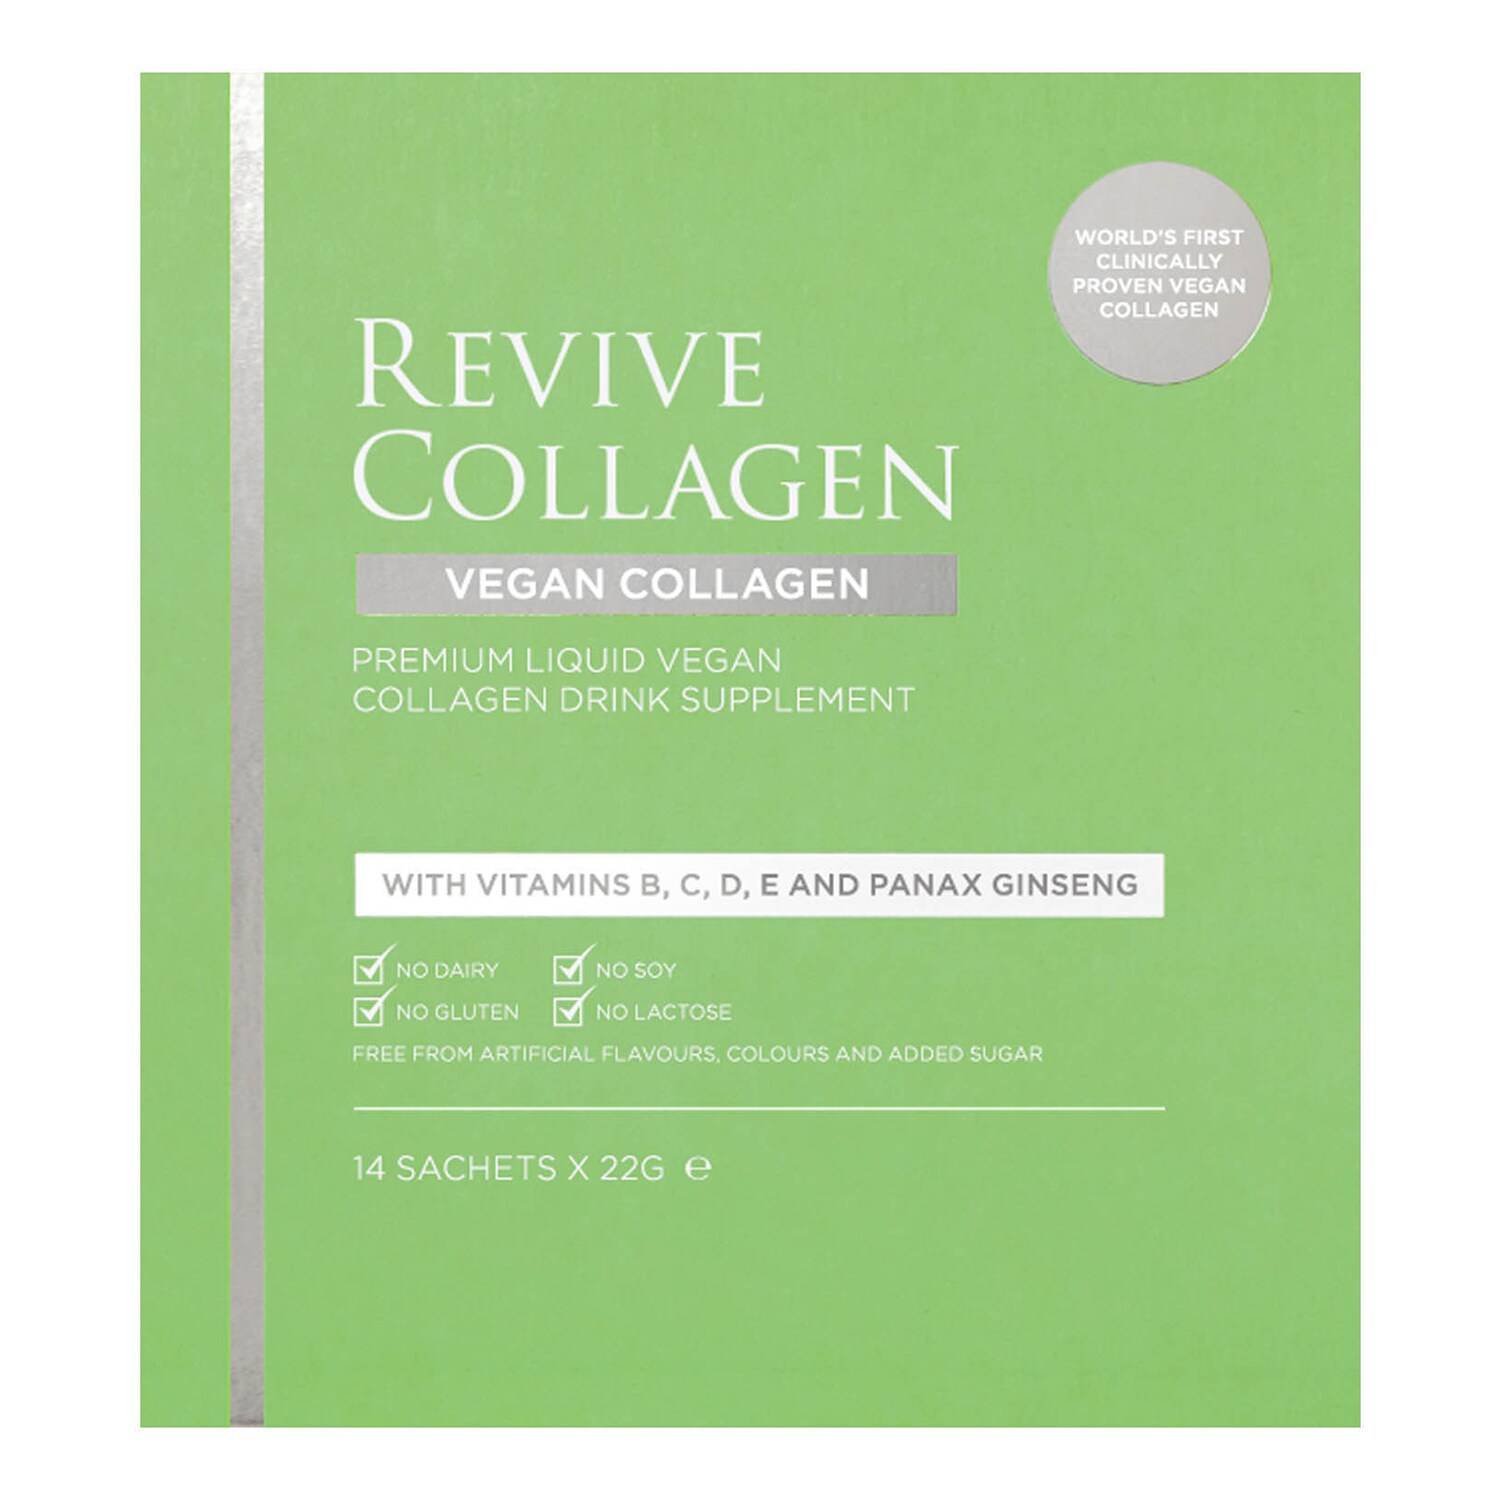 Revive Collagen Vegan Collagen Premium Liquid Supplement 14 Sachets